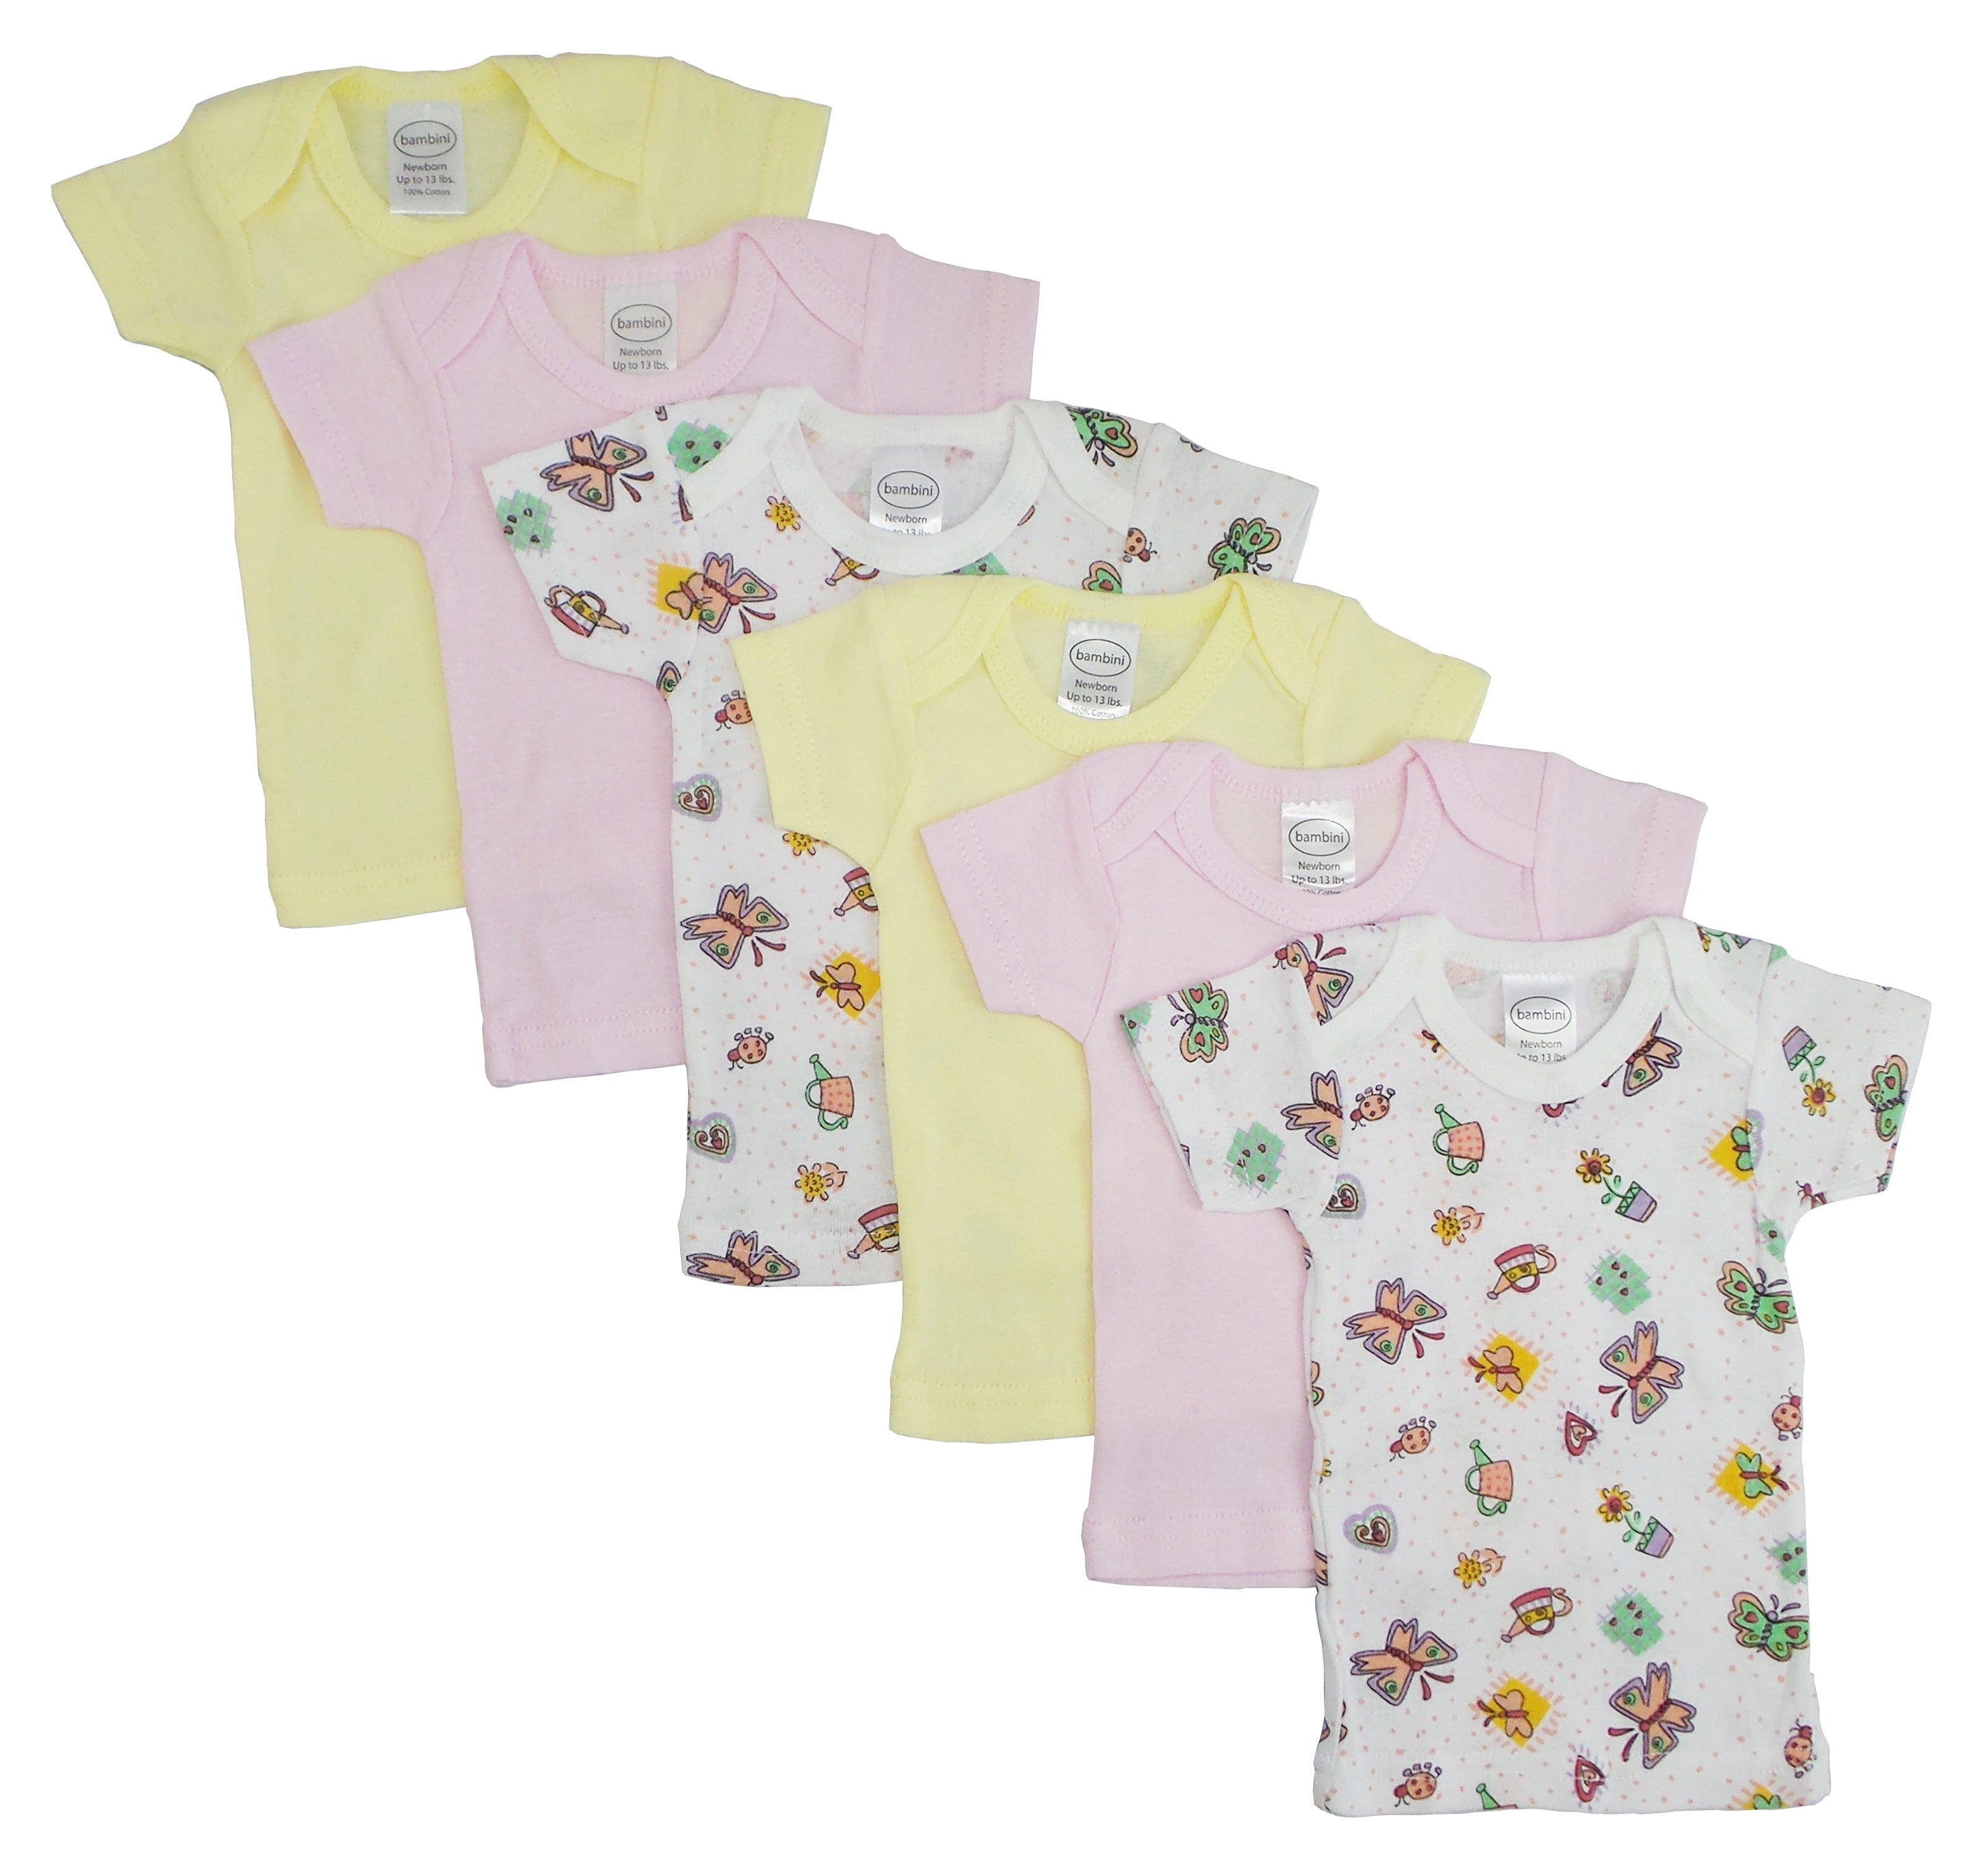 Cs-059m-059m Girls Pastel Variety Short Sleeve Lap T-shirts, Assorted & Printed - Medium